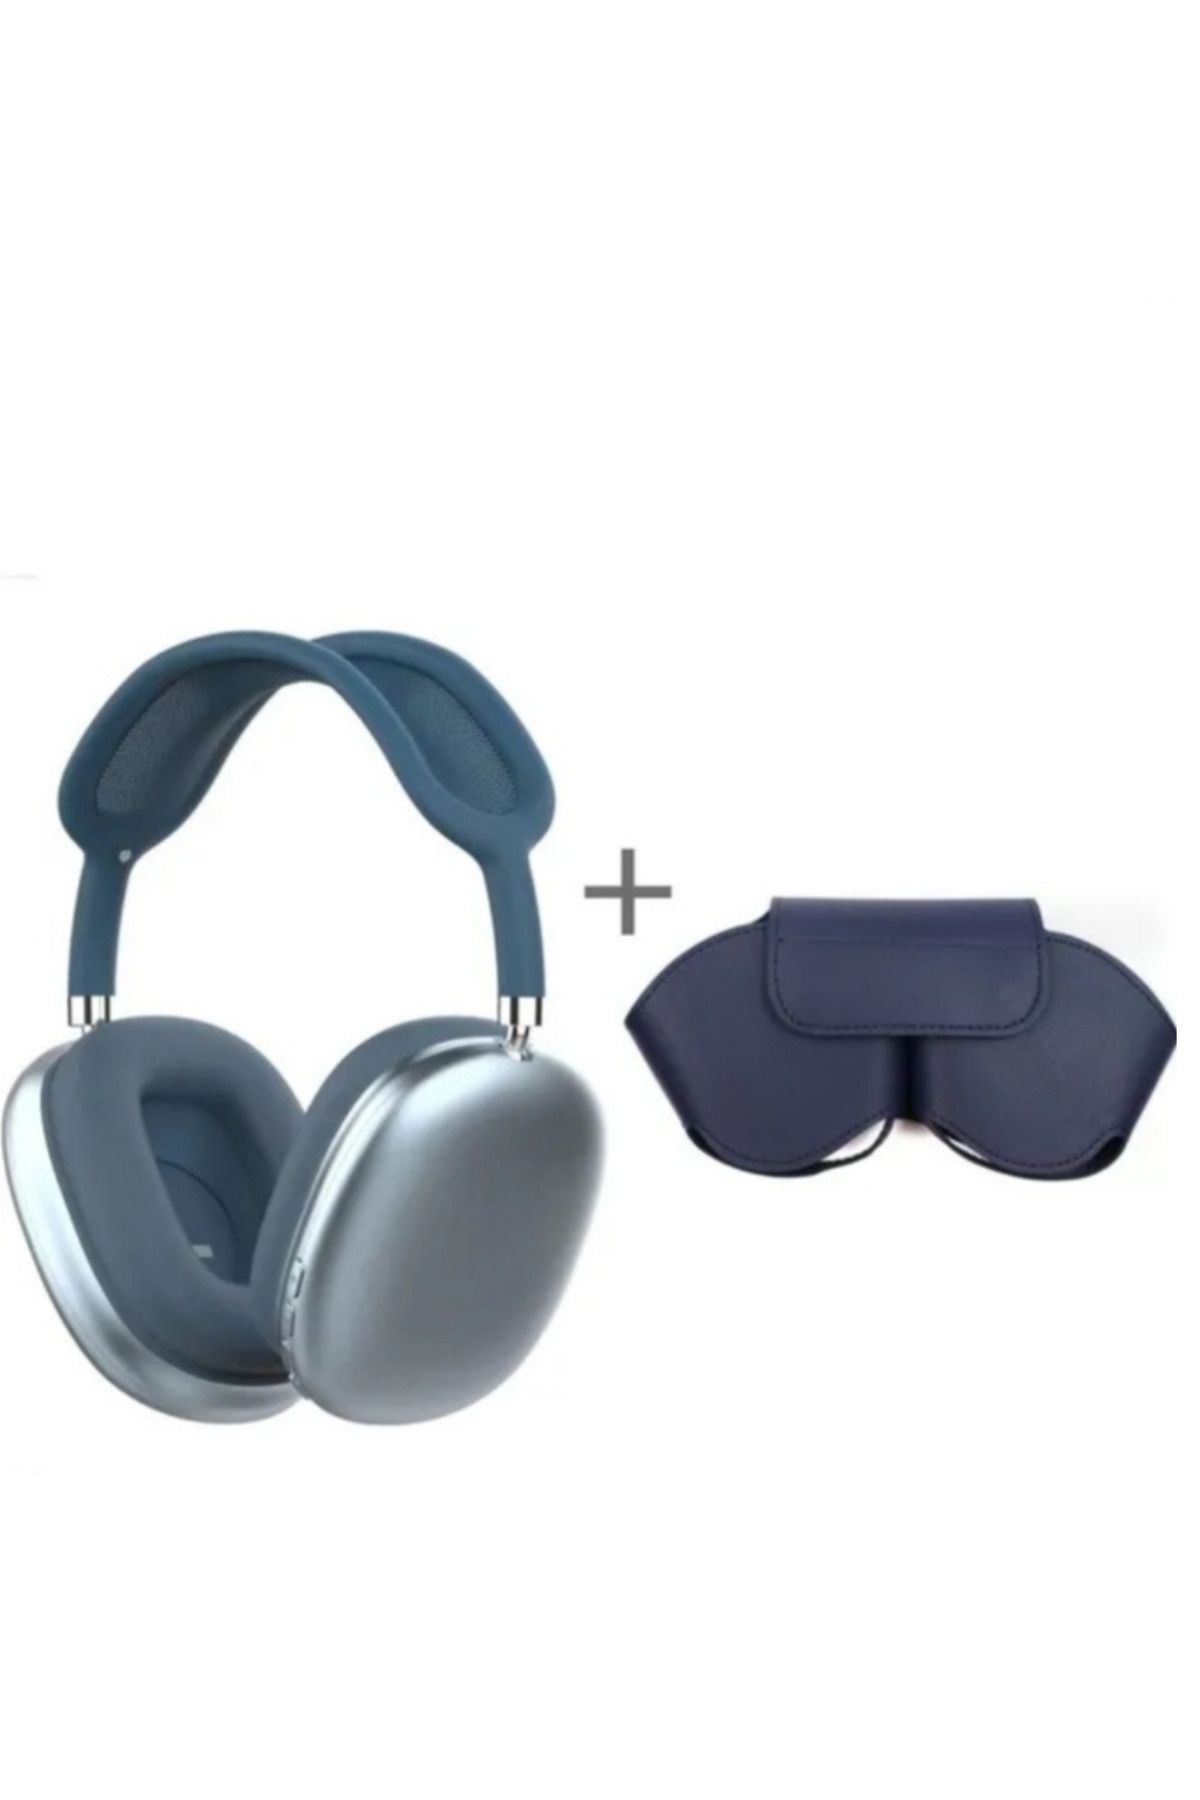 HEJARON Max Uyumlu Bluetooth Kulaküstü Kulaklık Bass Buffer